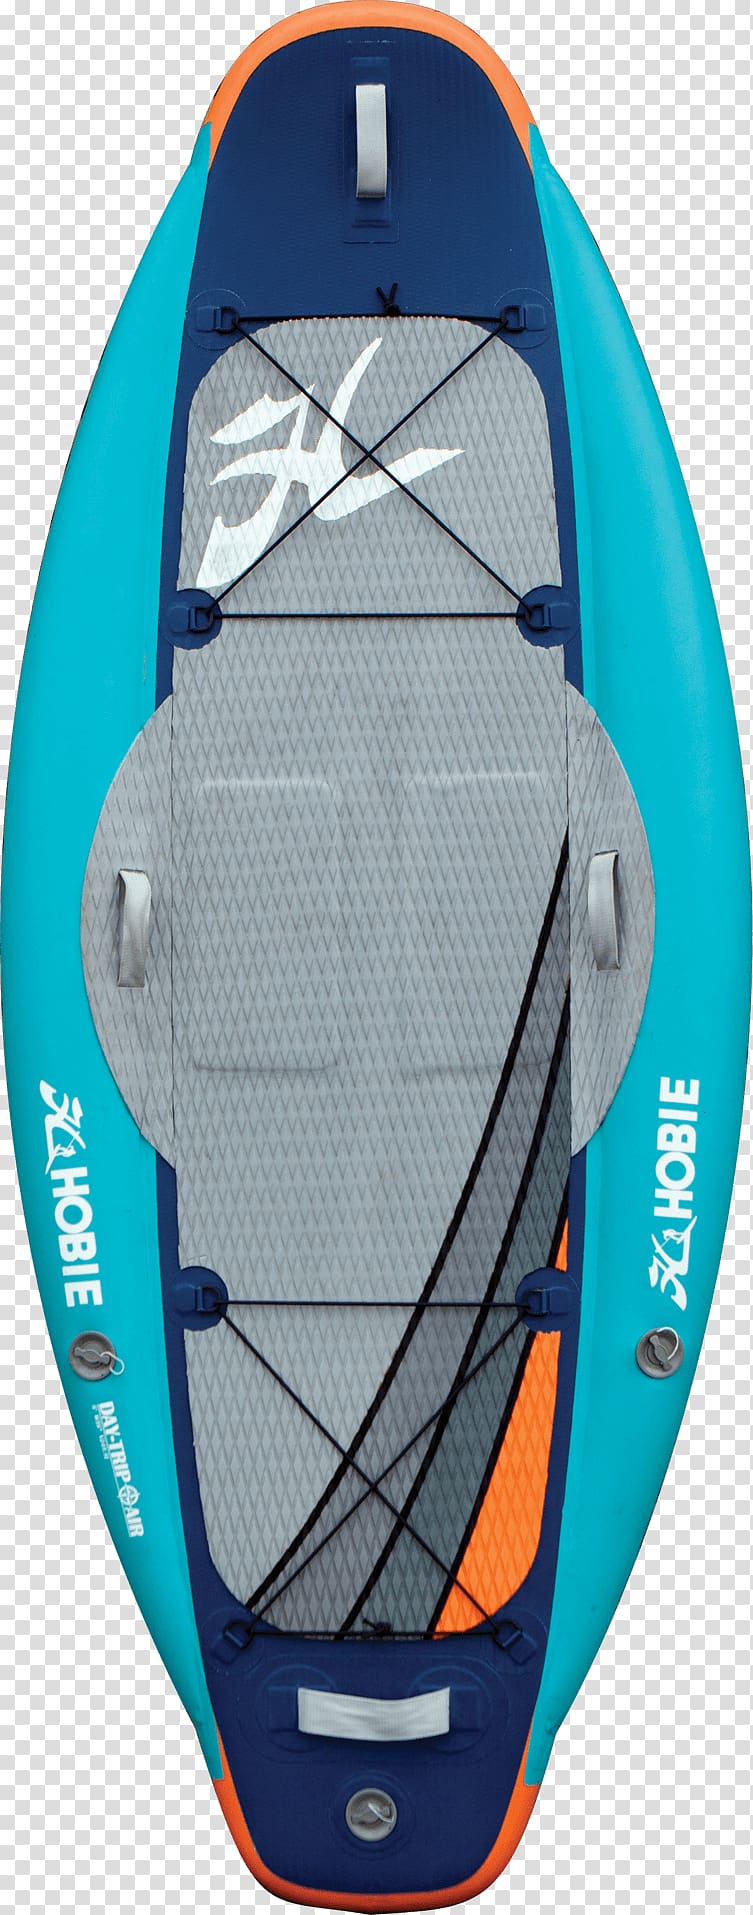 Surfboard Standup paddleboarding Outboard motor Kayak, boat transparent background PNG clipart